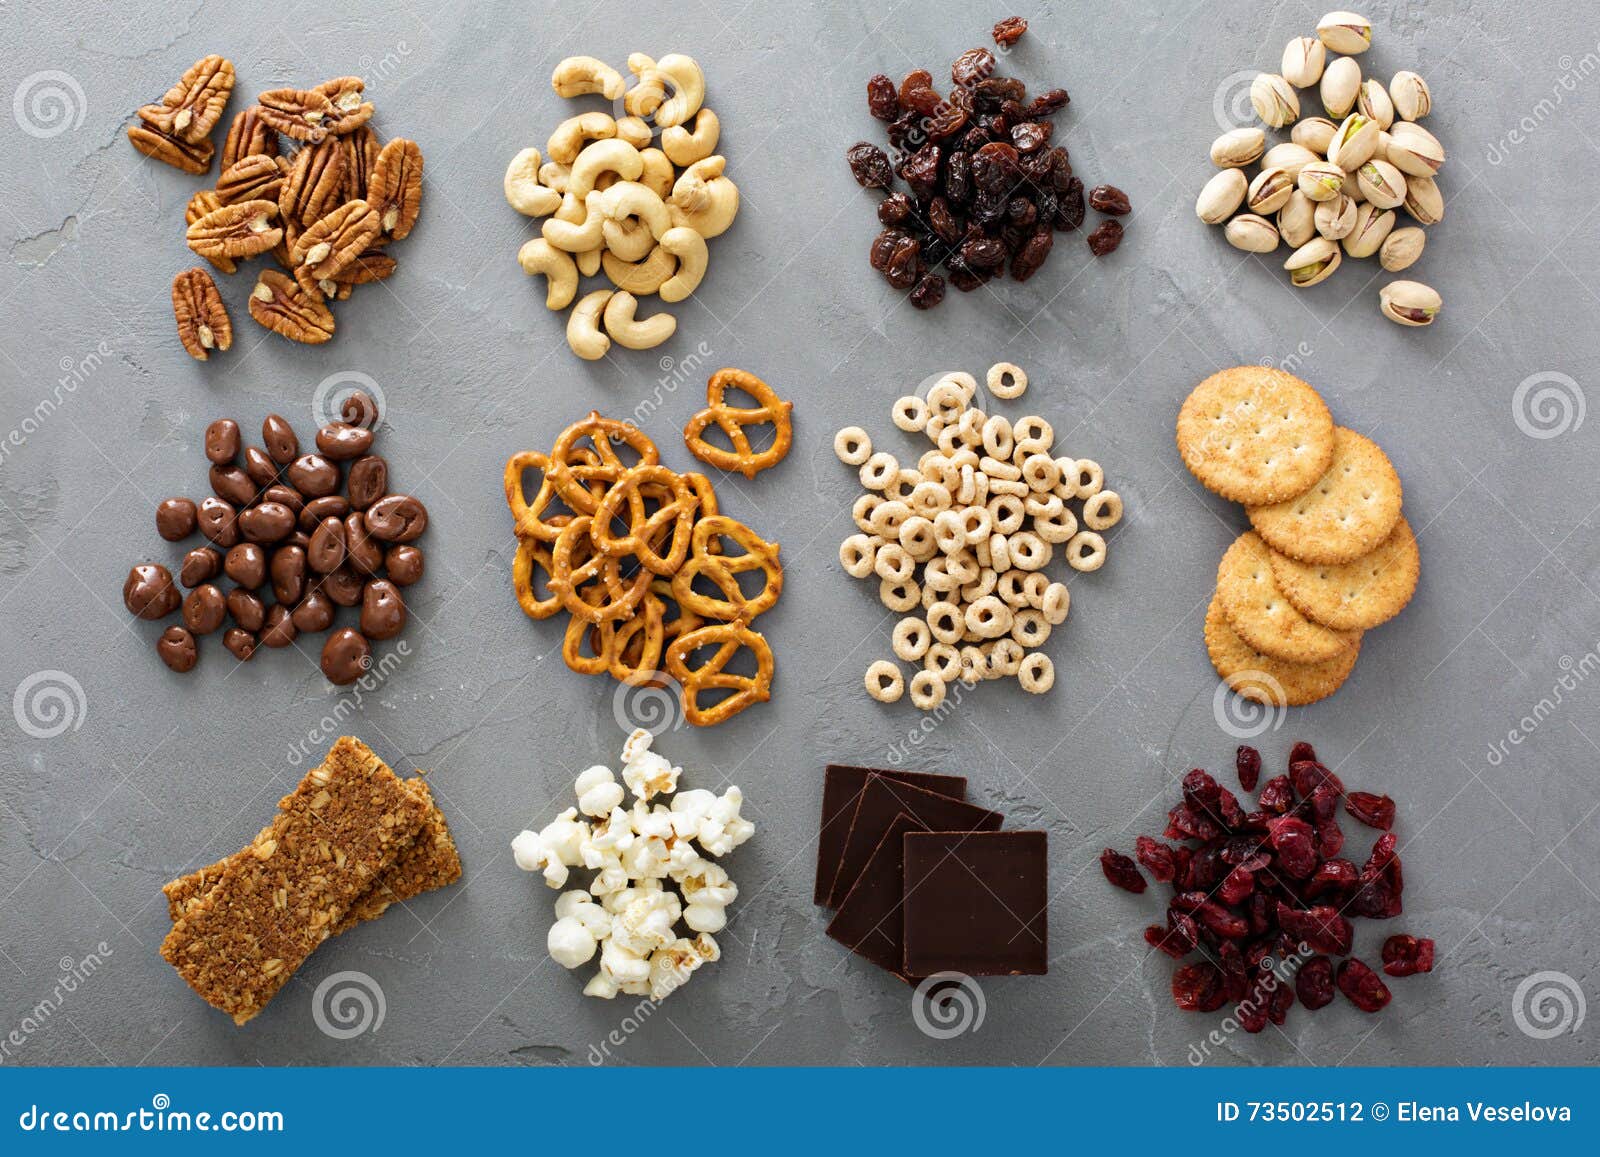 variety of healthy snacks overhead shot